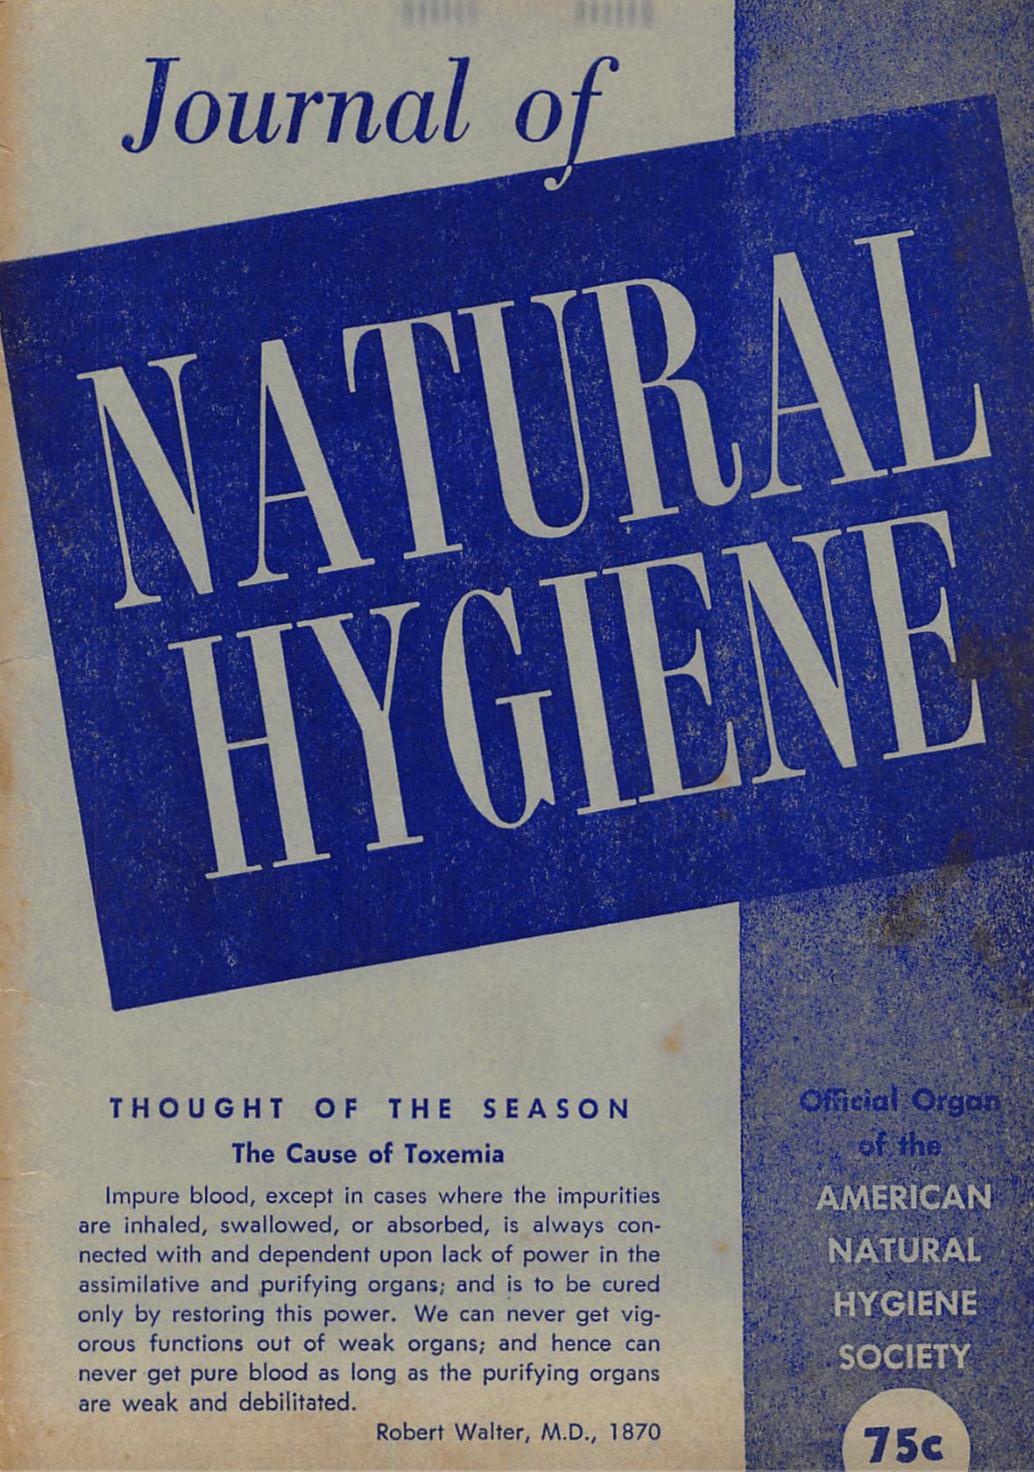 Winter Issue 1956